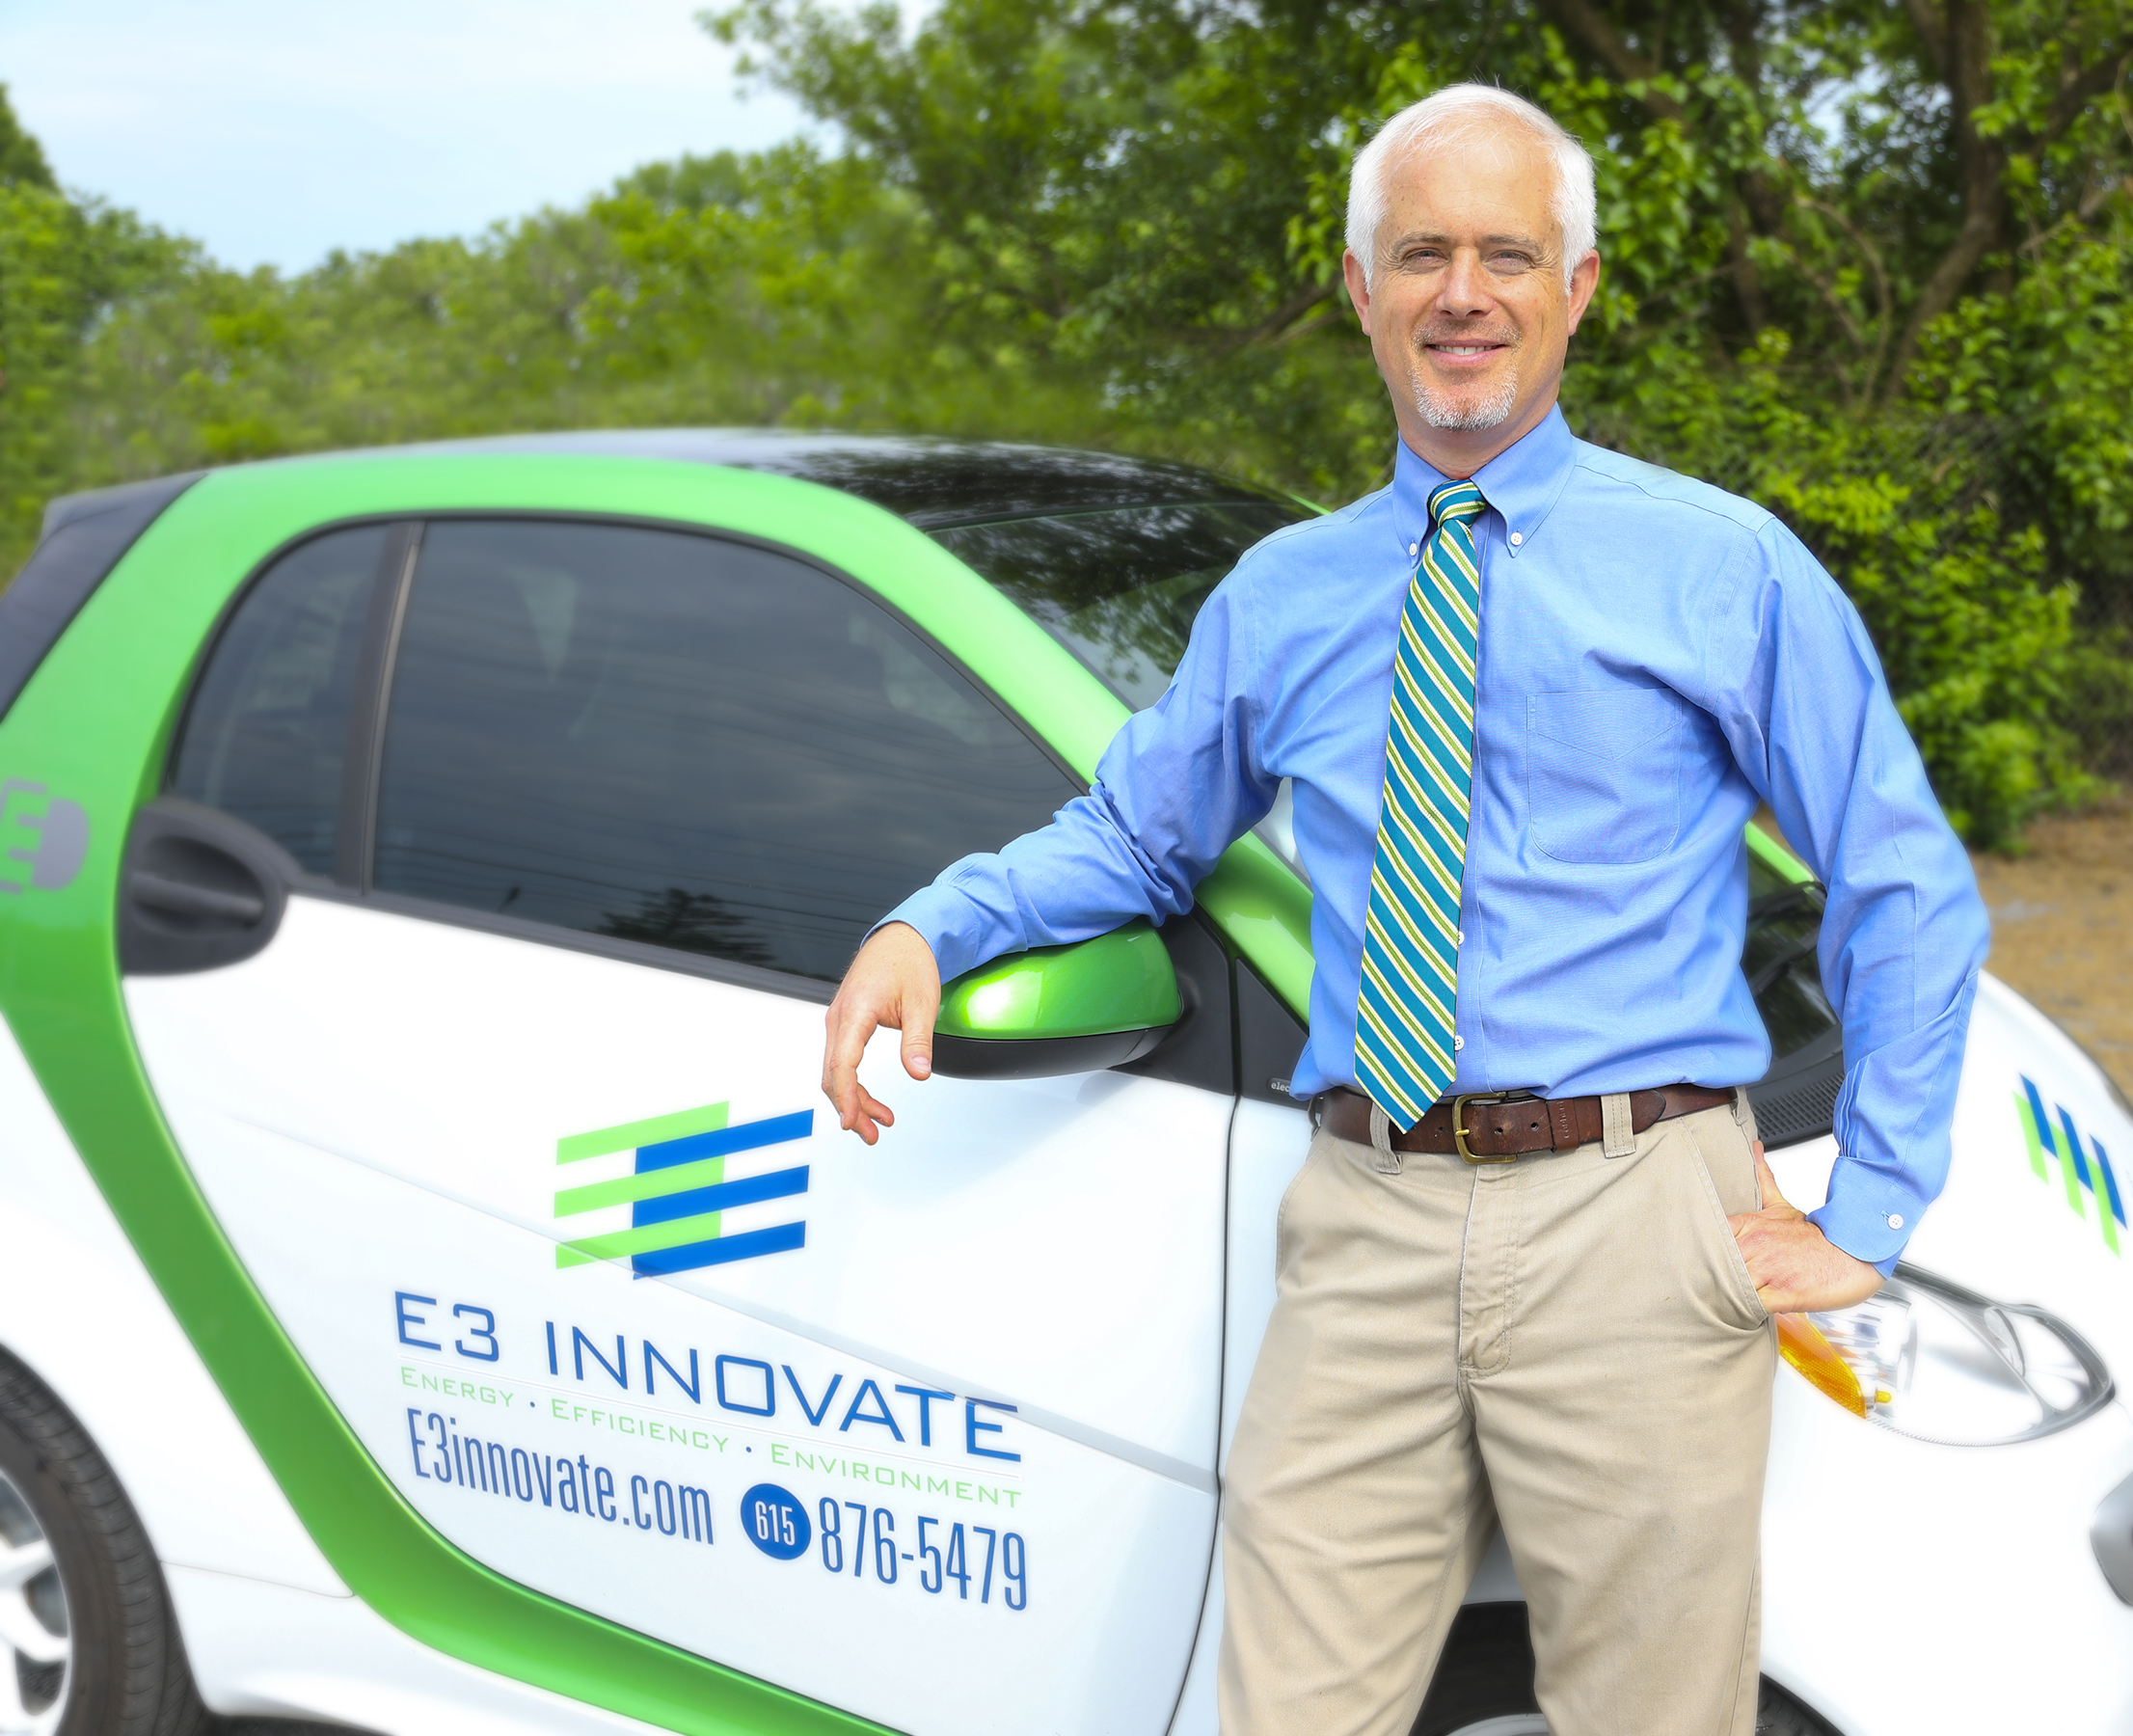 Erik Daugherty in front of E3 innovate car